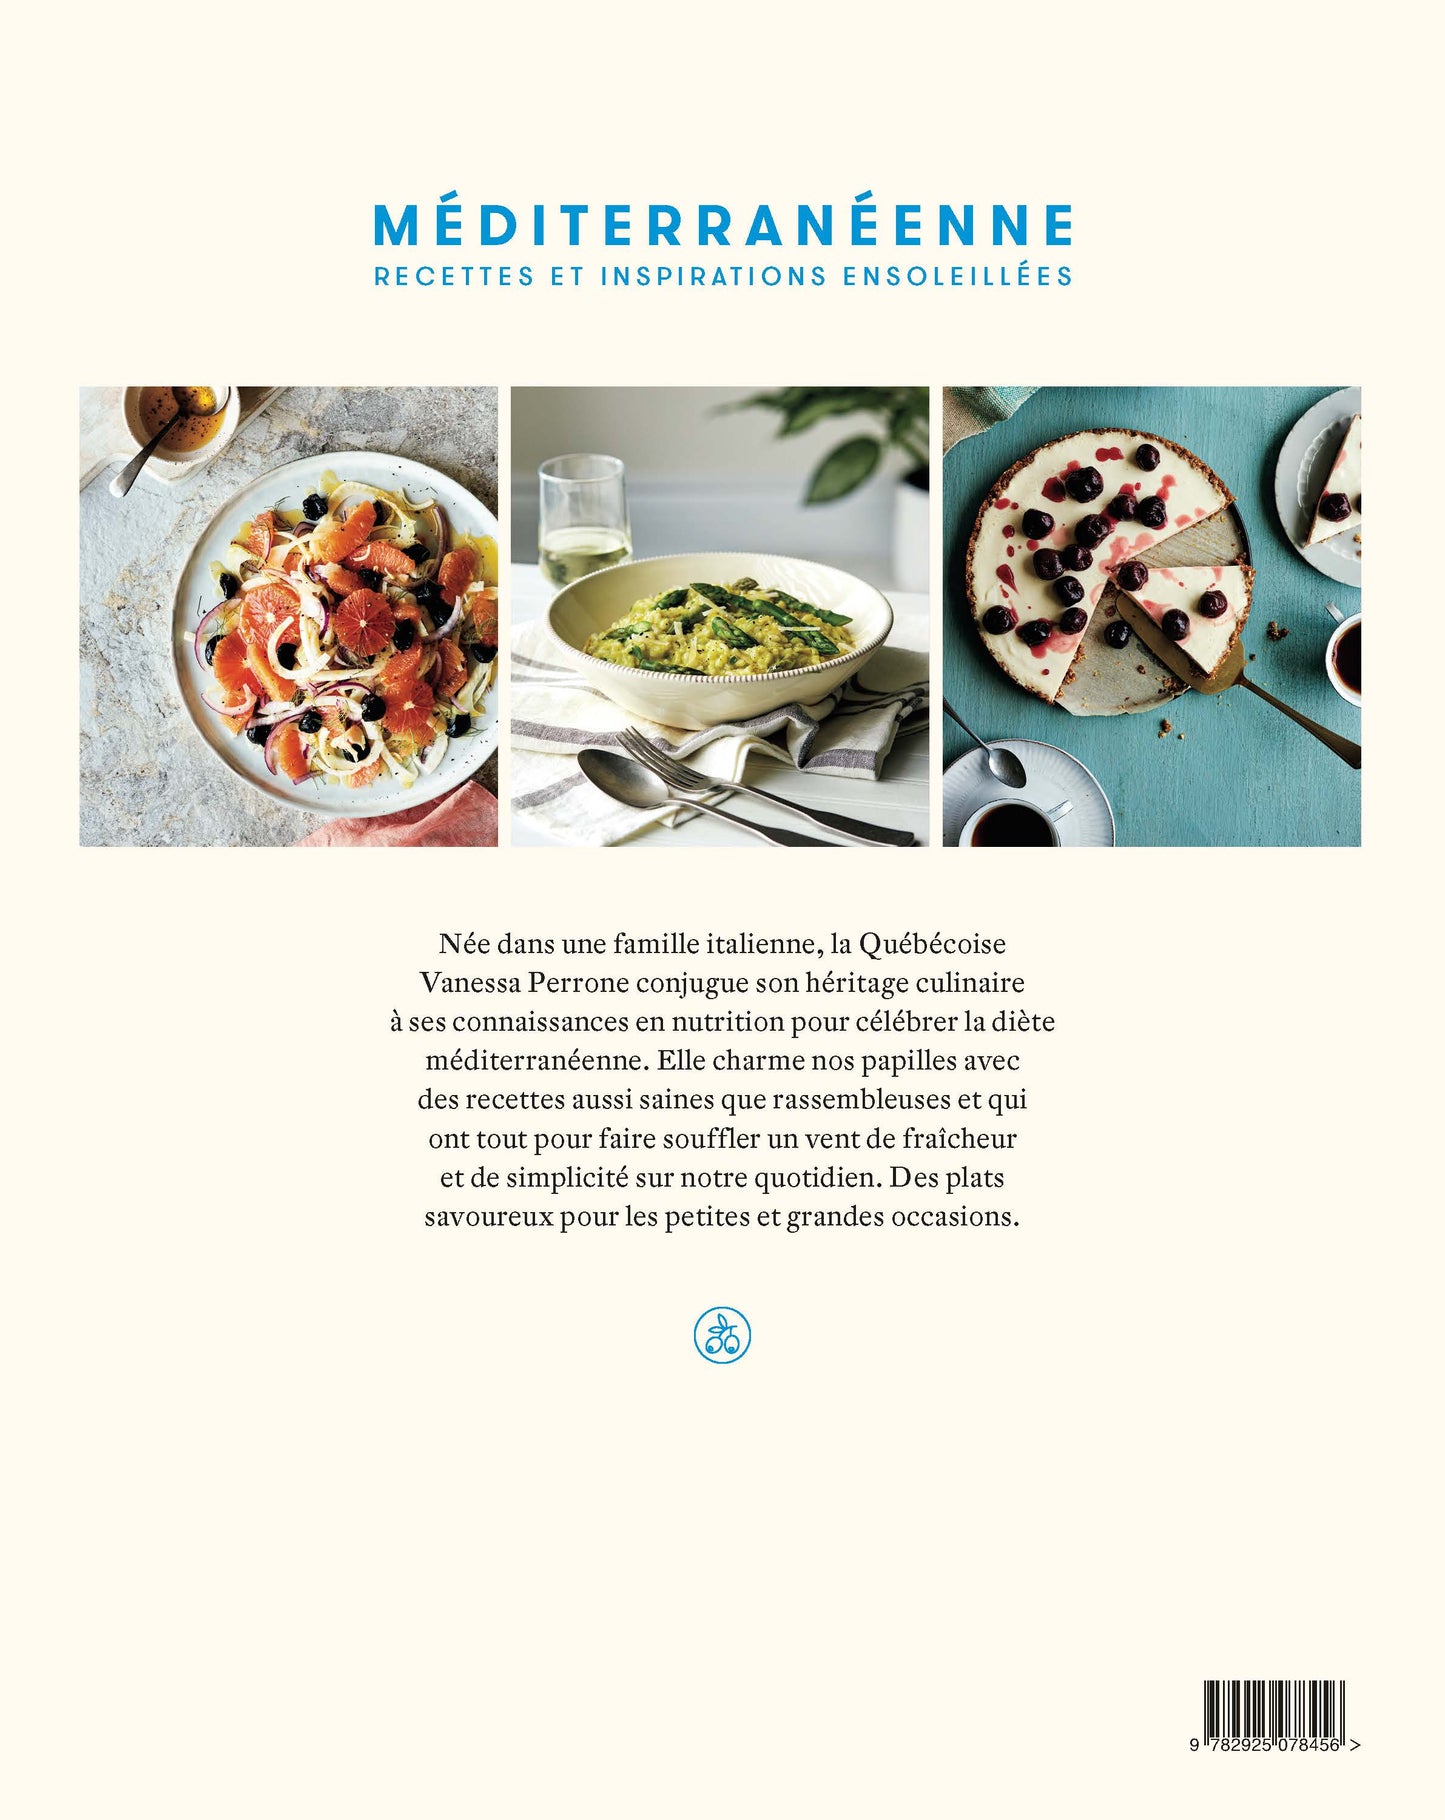 Mediterranean. Sunny recipes and inspirations [PAPER]